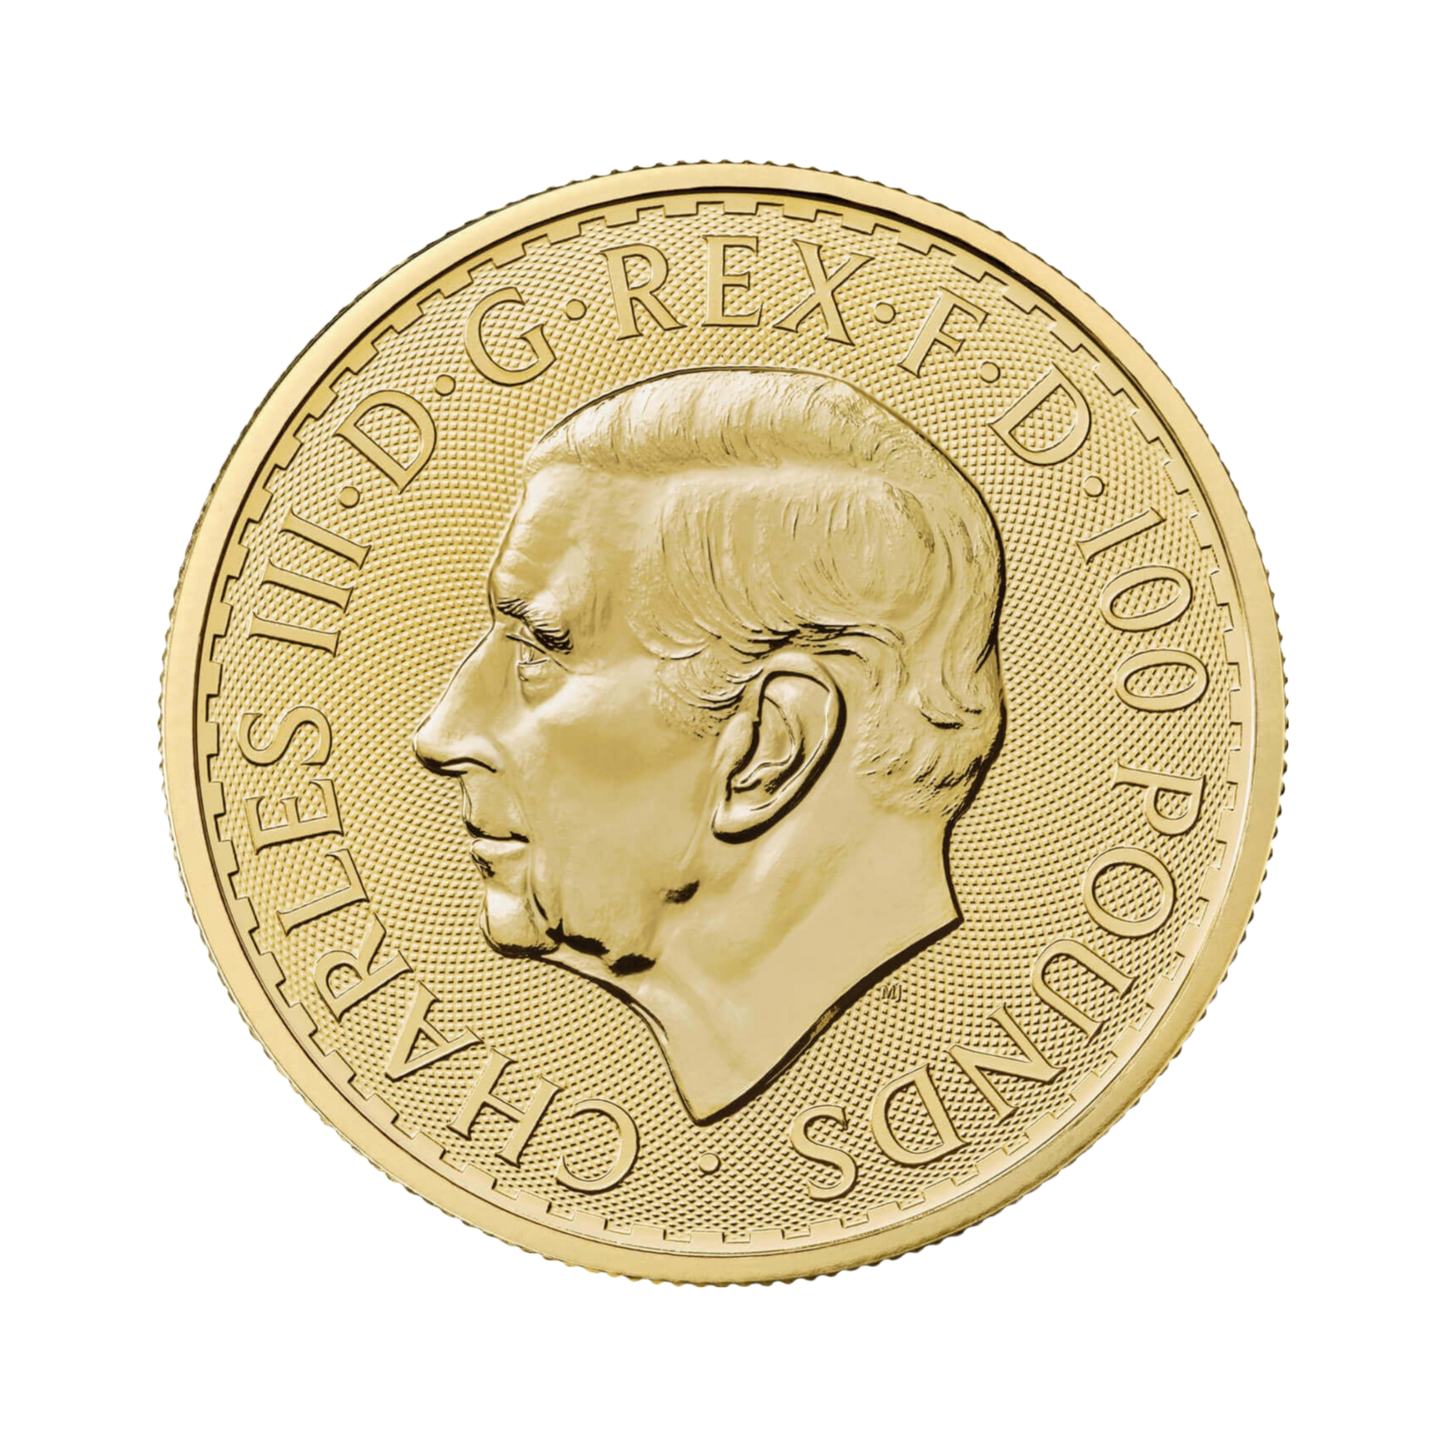 1oz Britannia Gold Coin